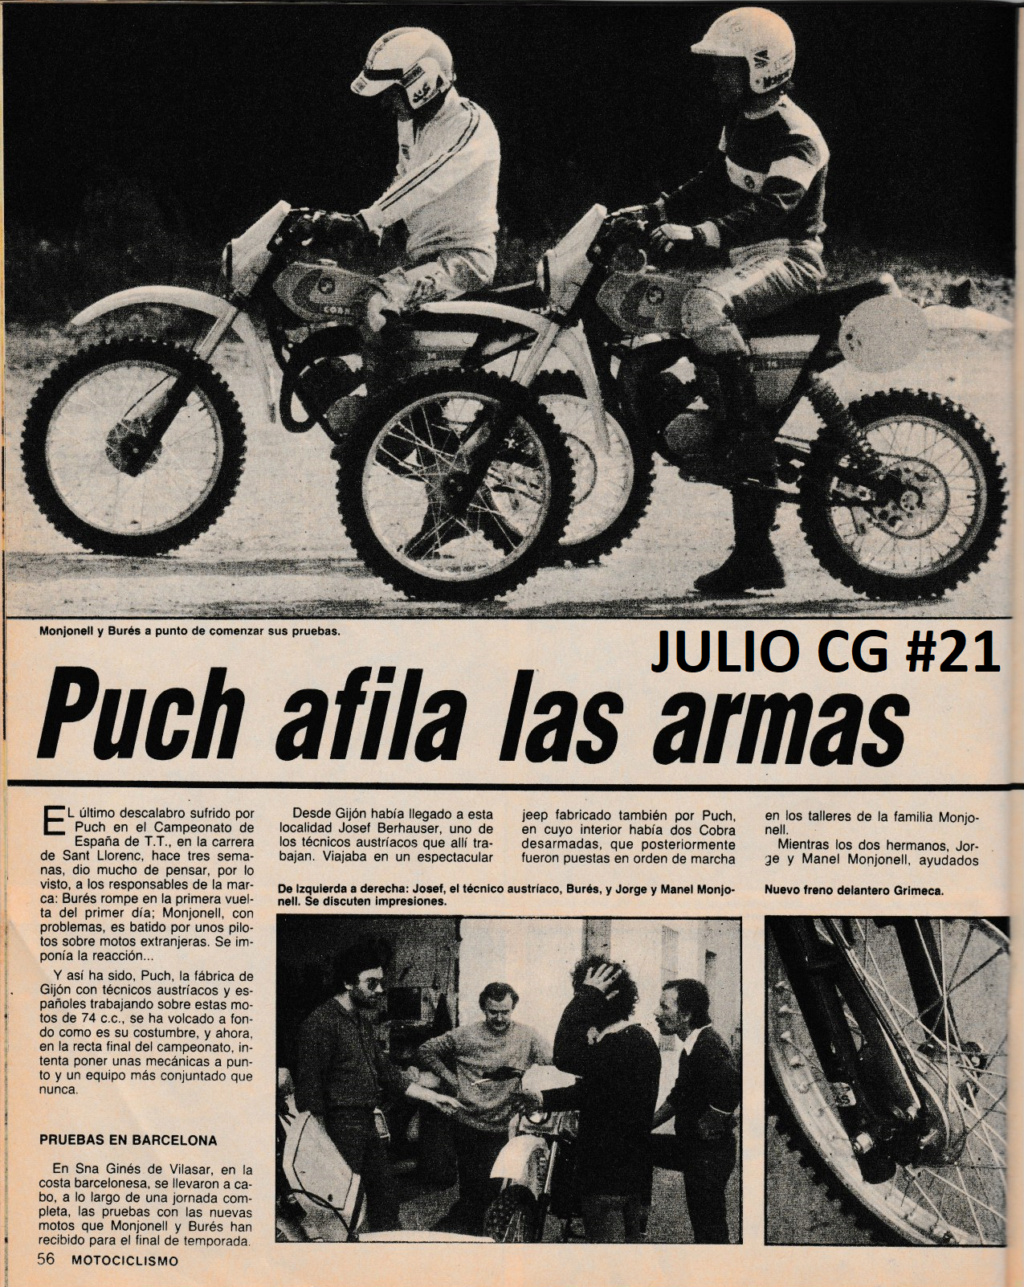 puch h3 -registronex - Puch AFILA SUS ARMAS TT   1980 Escze398